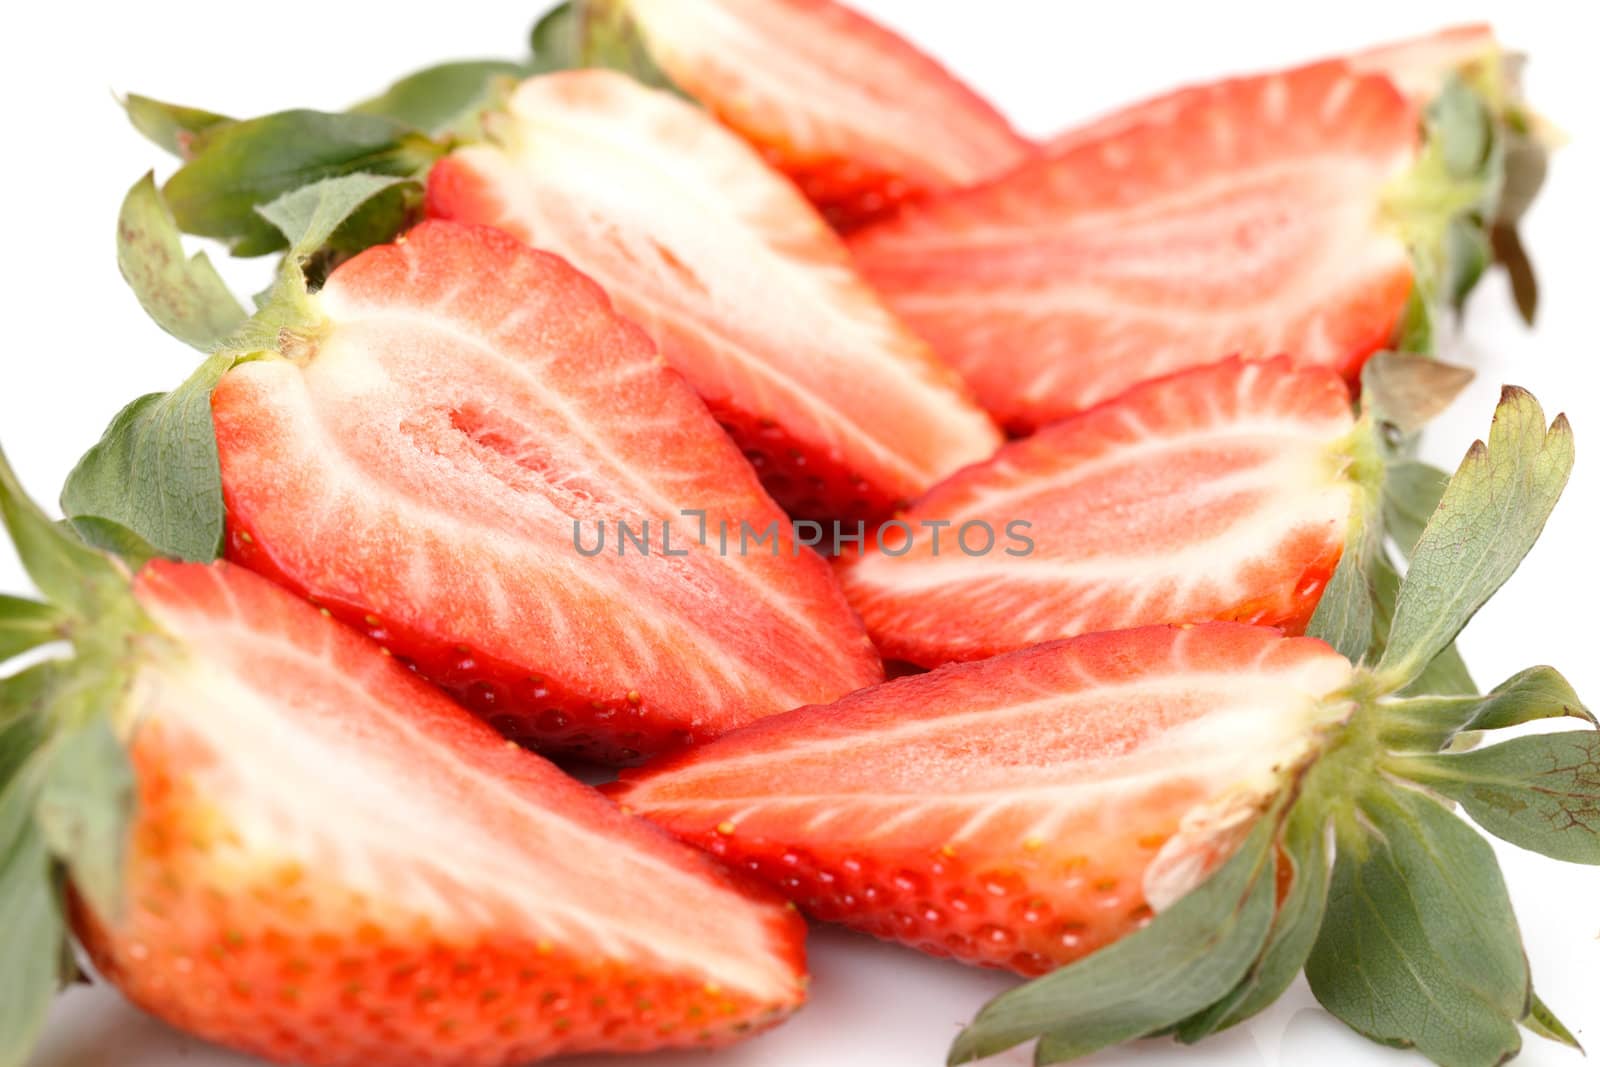 Fresh Strawberries closeup over white background